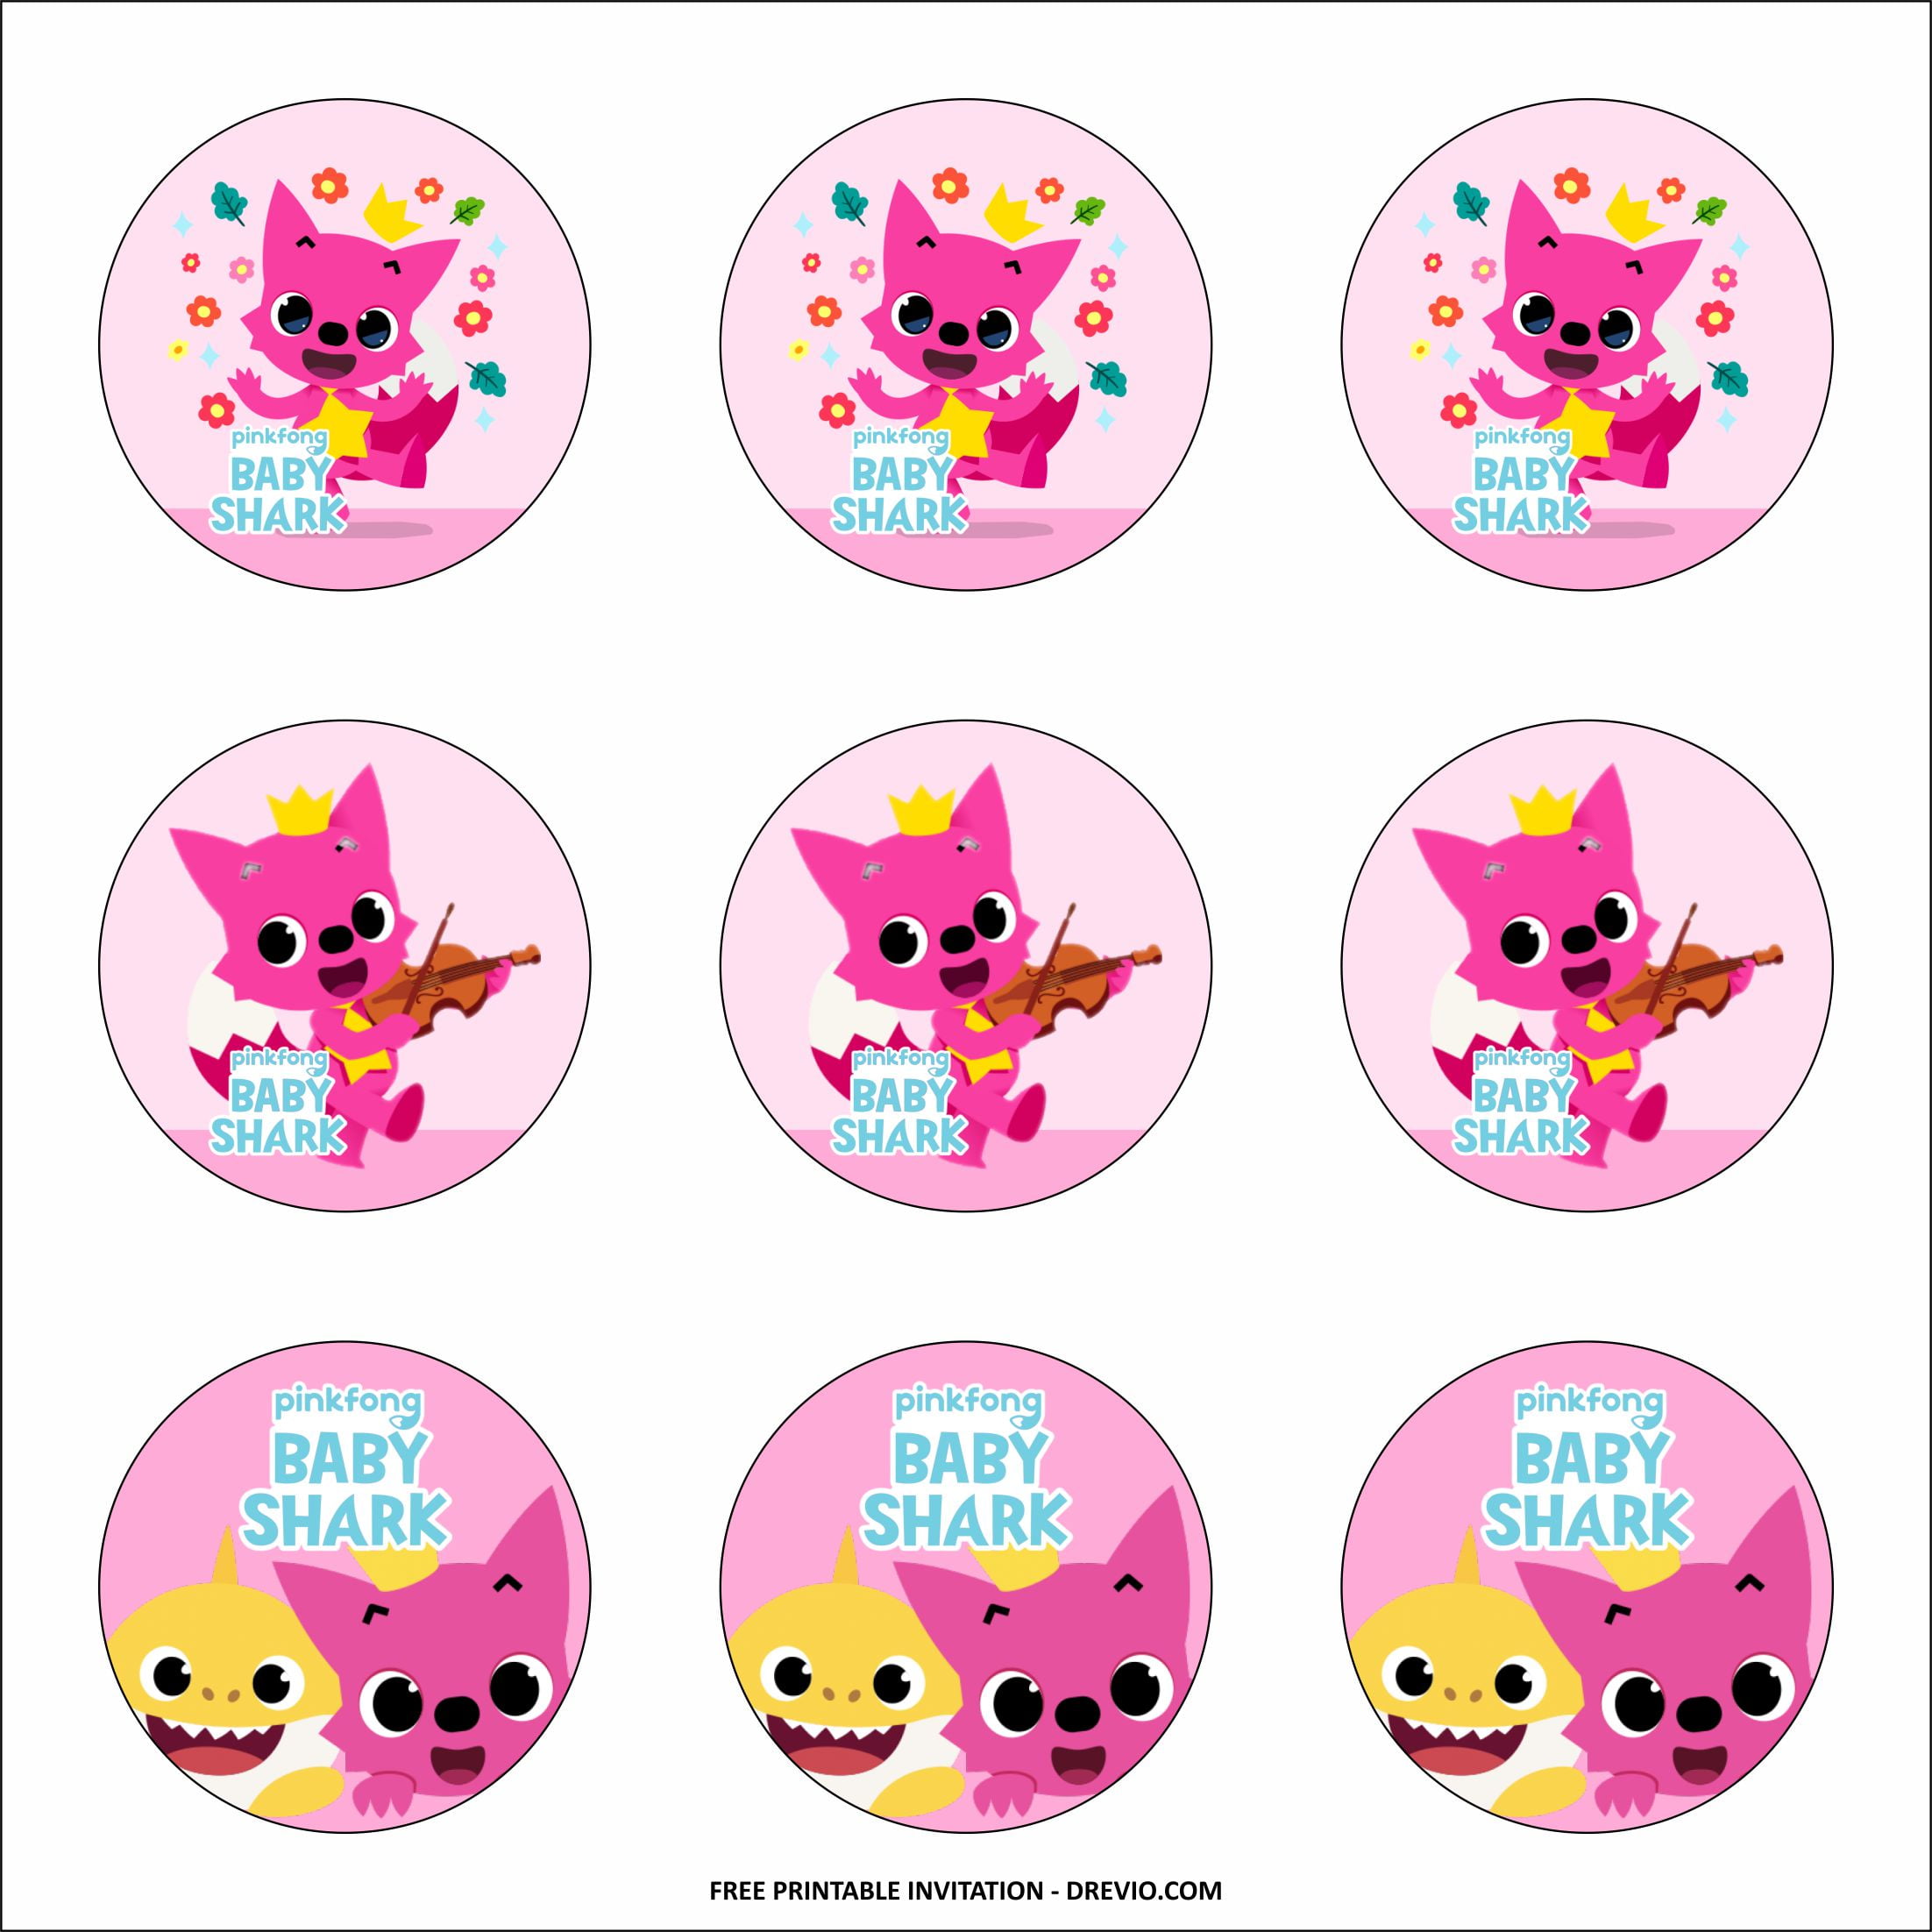 Free Printable Pinkfong Baby Shark Birthday Party Kits Template Download Hundreds Free Printable Birthday Invitation Templates